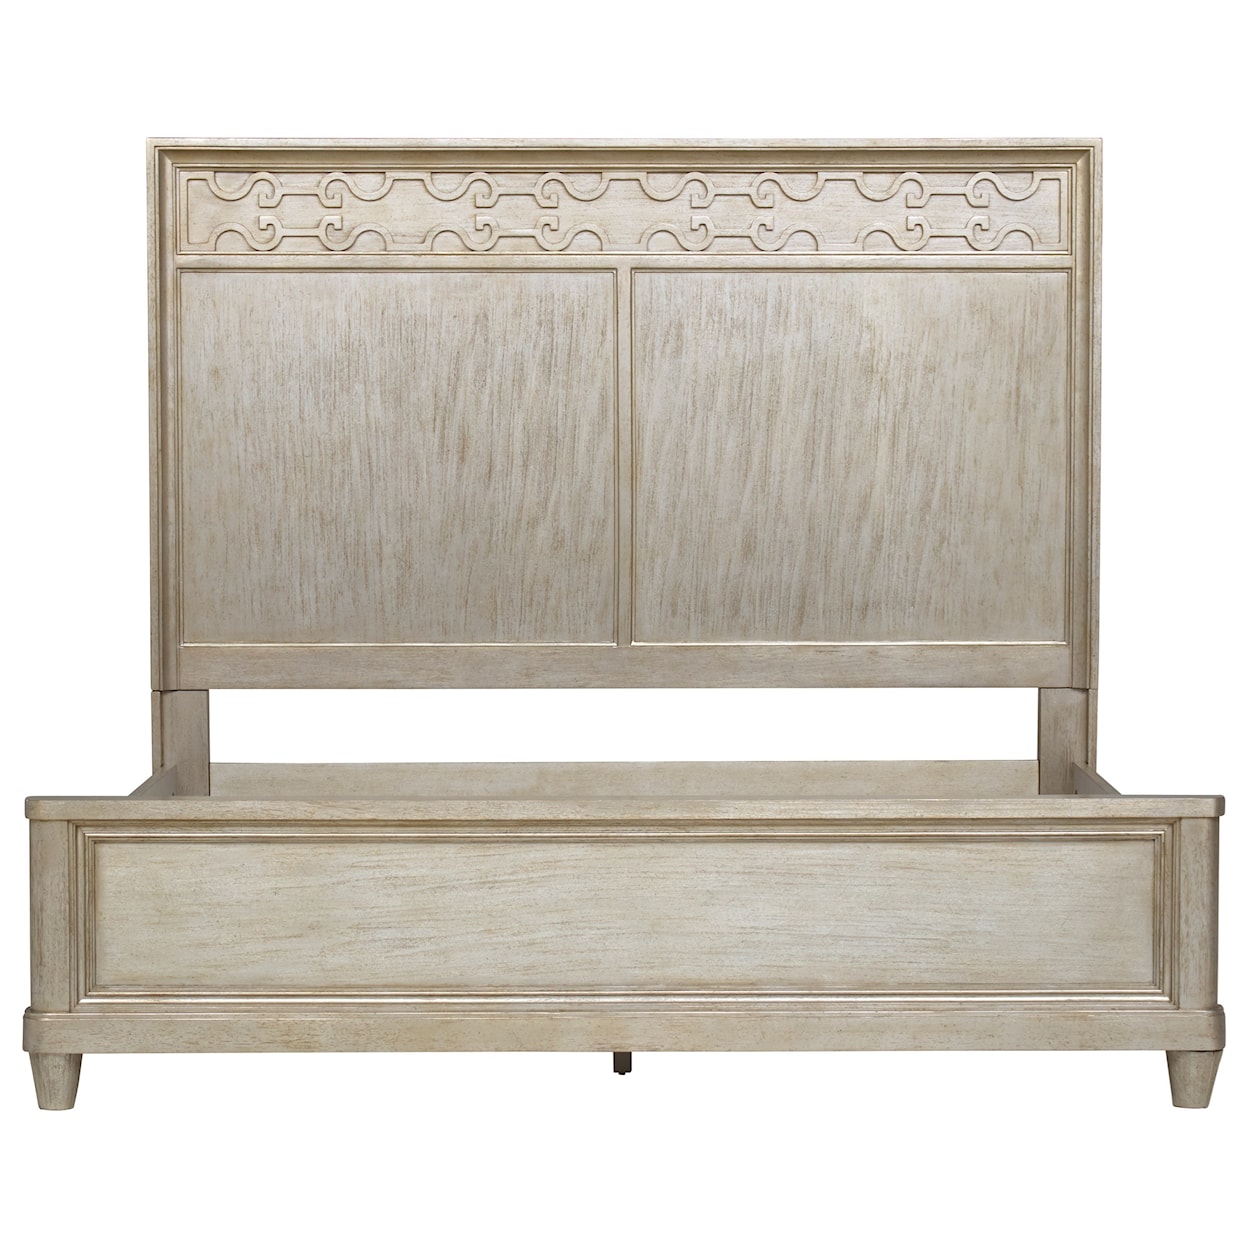 A.R.T. Furniture Inc Morrissey Queen Cashin Panel Bed 